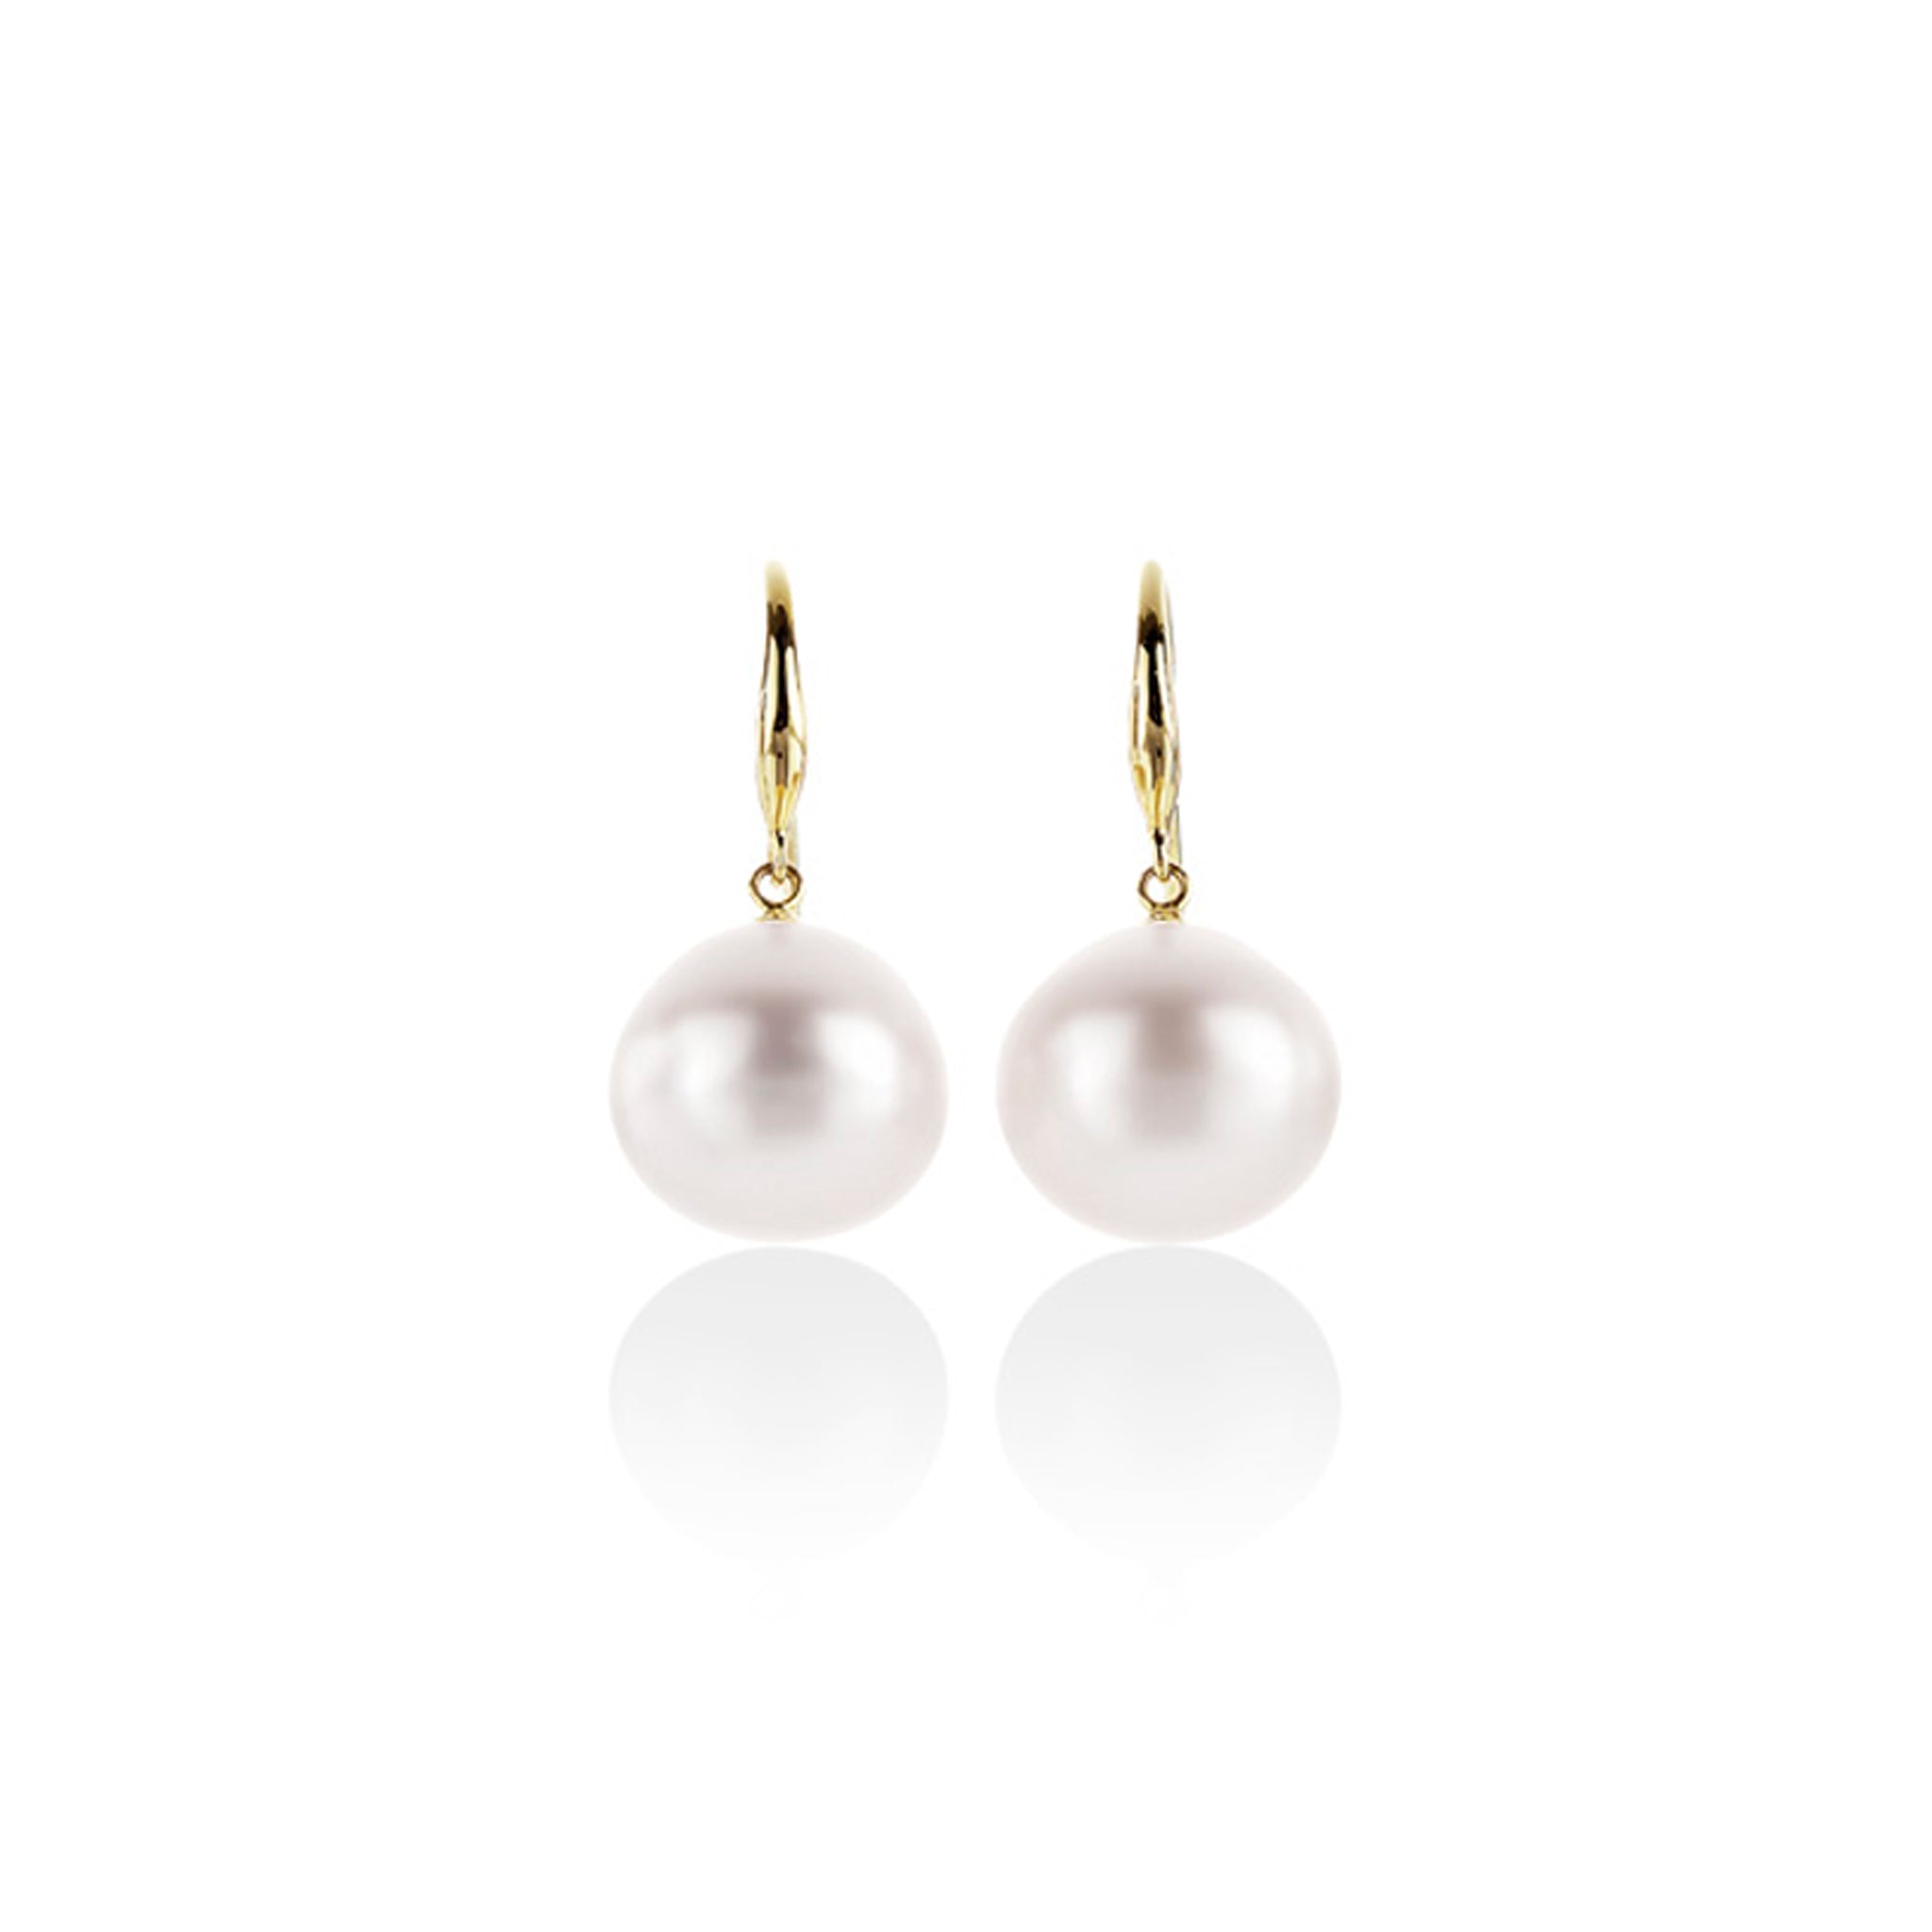 9ct gold South Sea pearl earrings